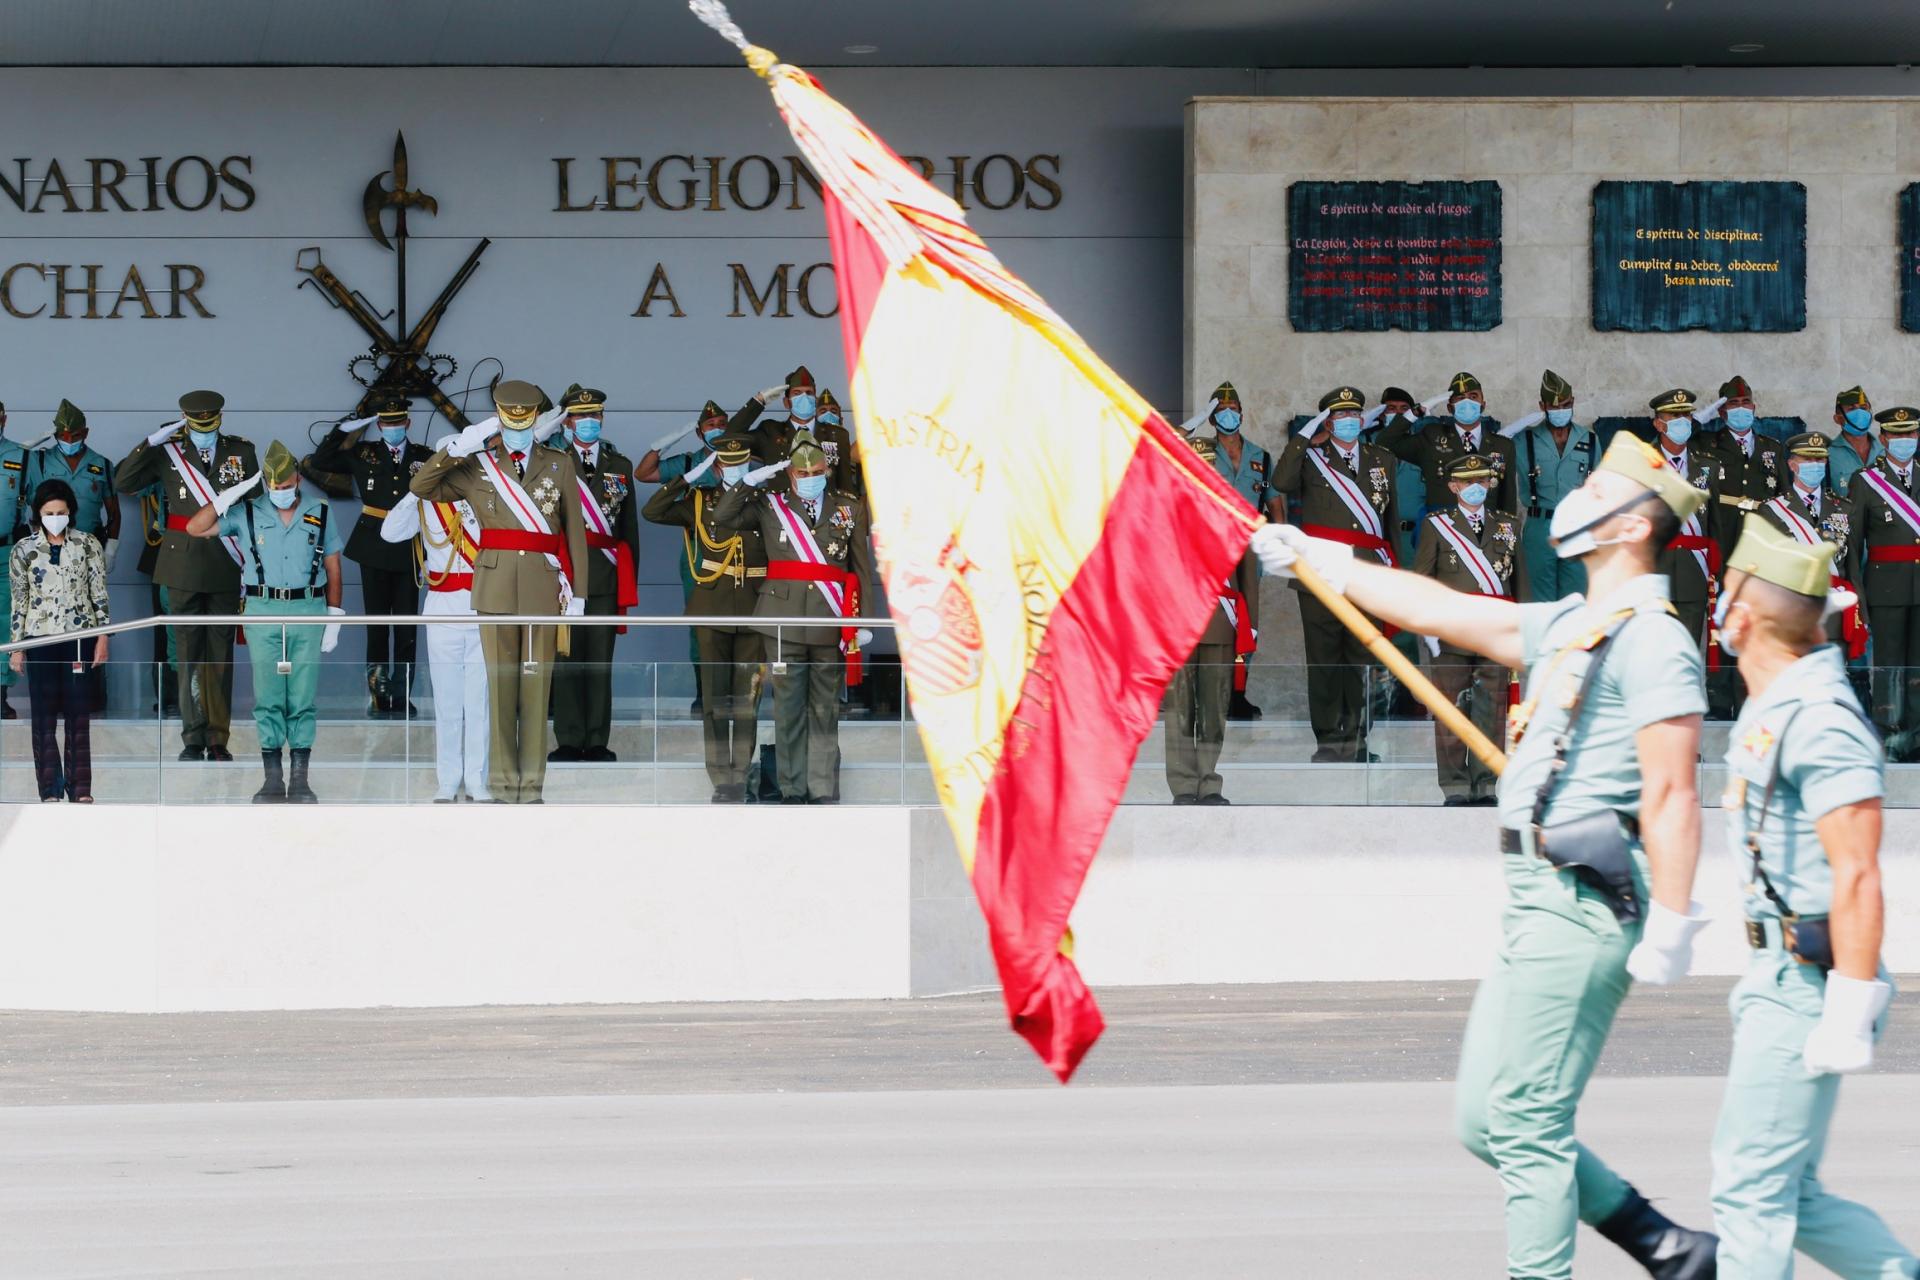 Felipe rend hommage au courage de la legion en s inclinant